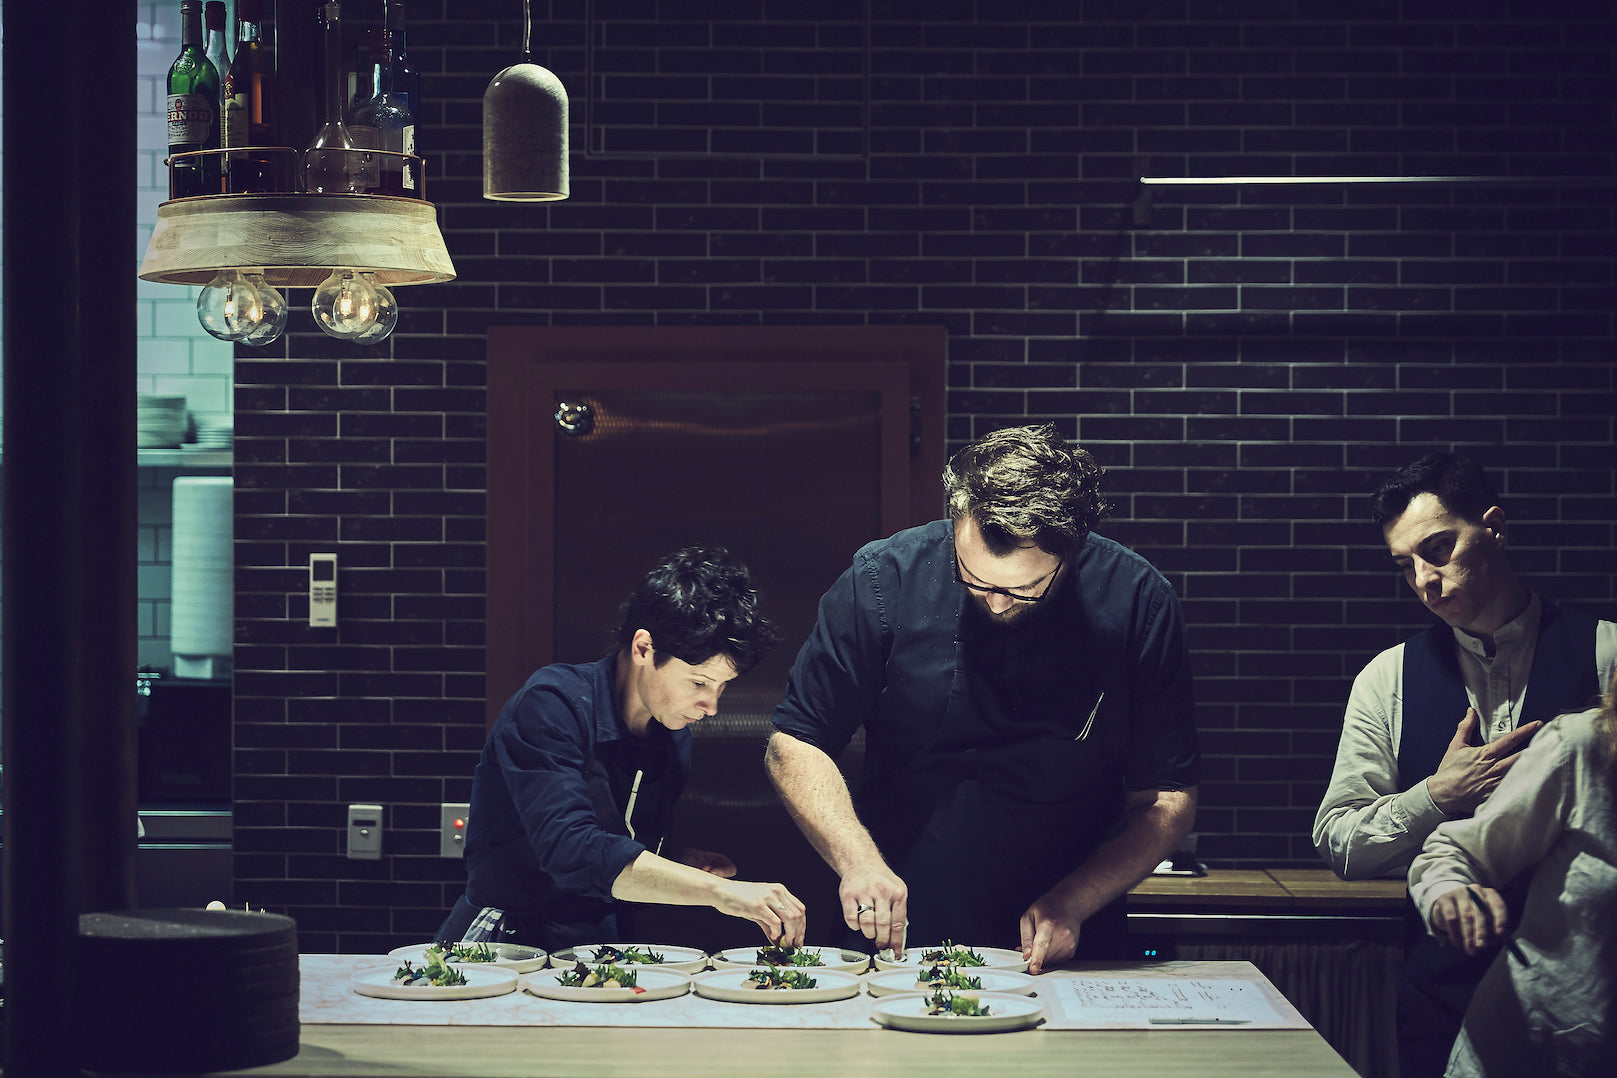 Restaurant lûmé: illuminating Melbourne’s culinary scene